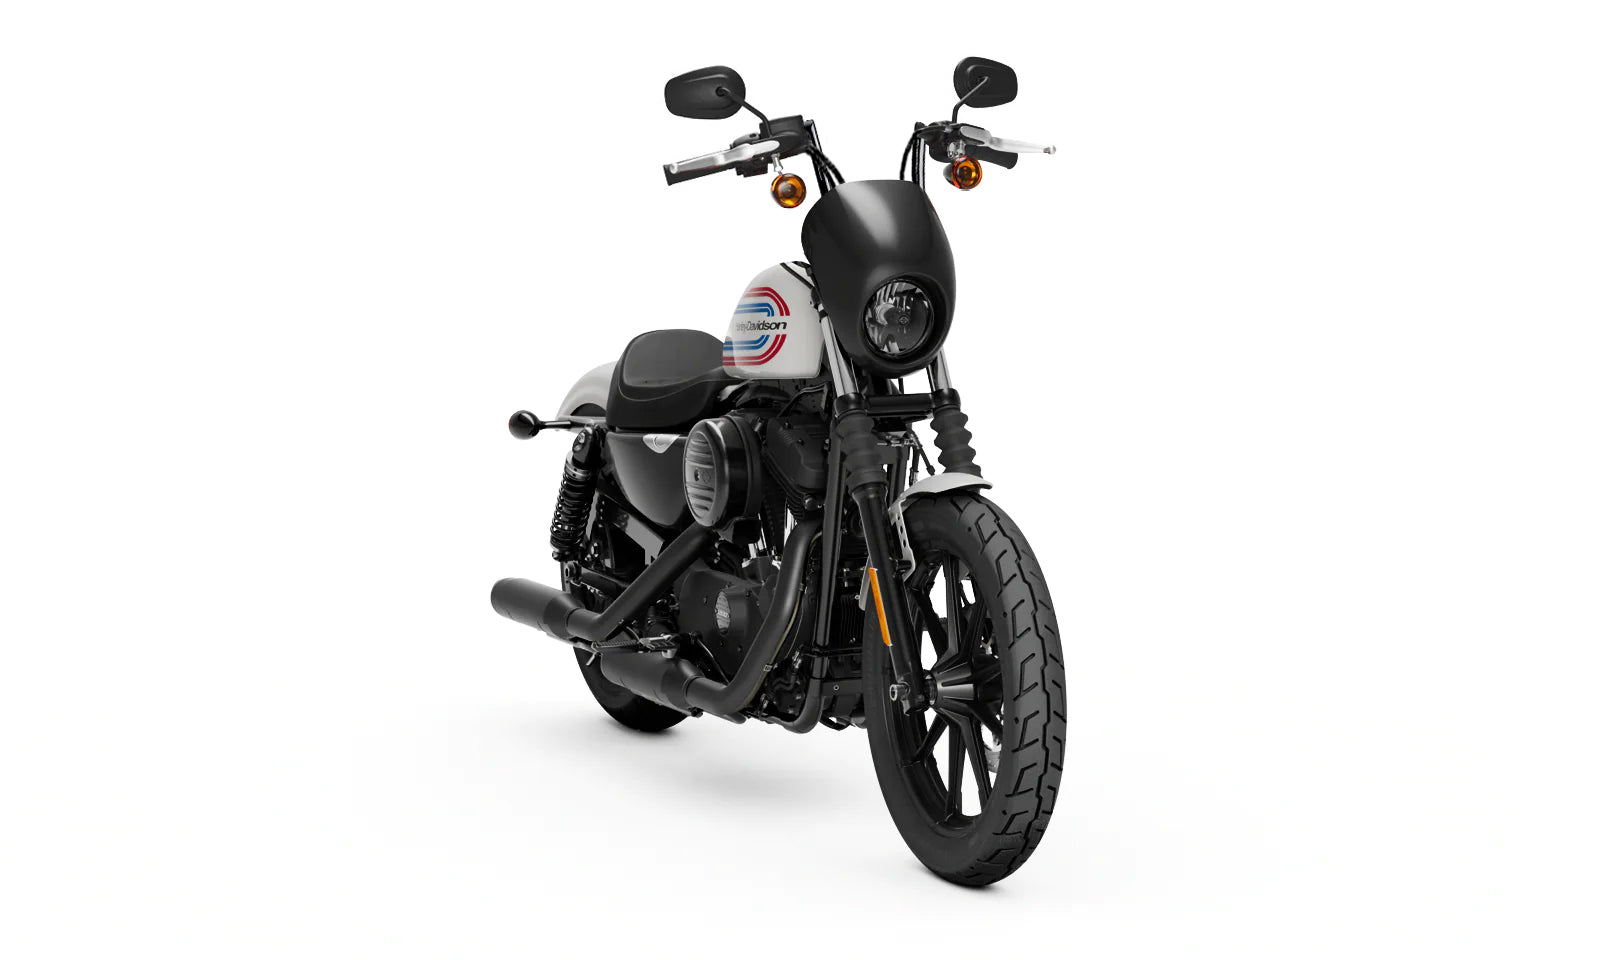 Viking Iron Born 9" Handlebar For Harley Sportster Iron 1200 Gloss Black Bag on Bike View @expand